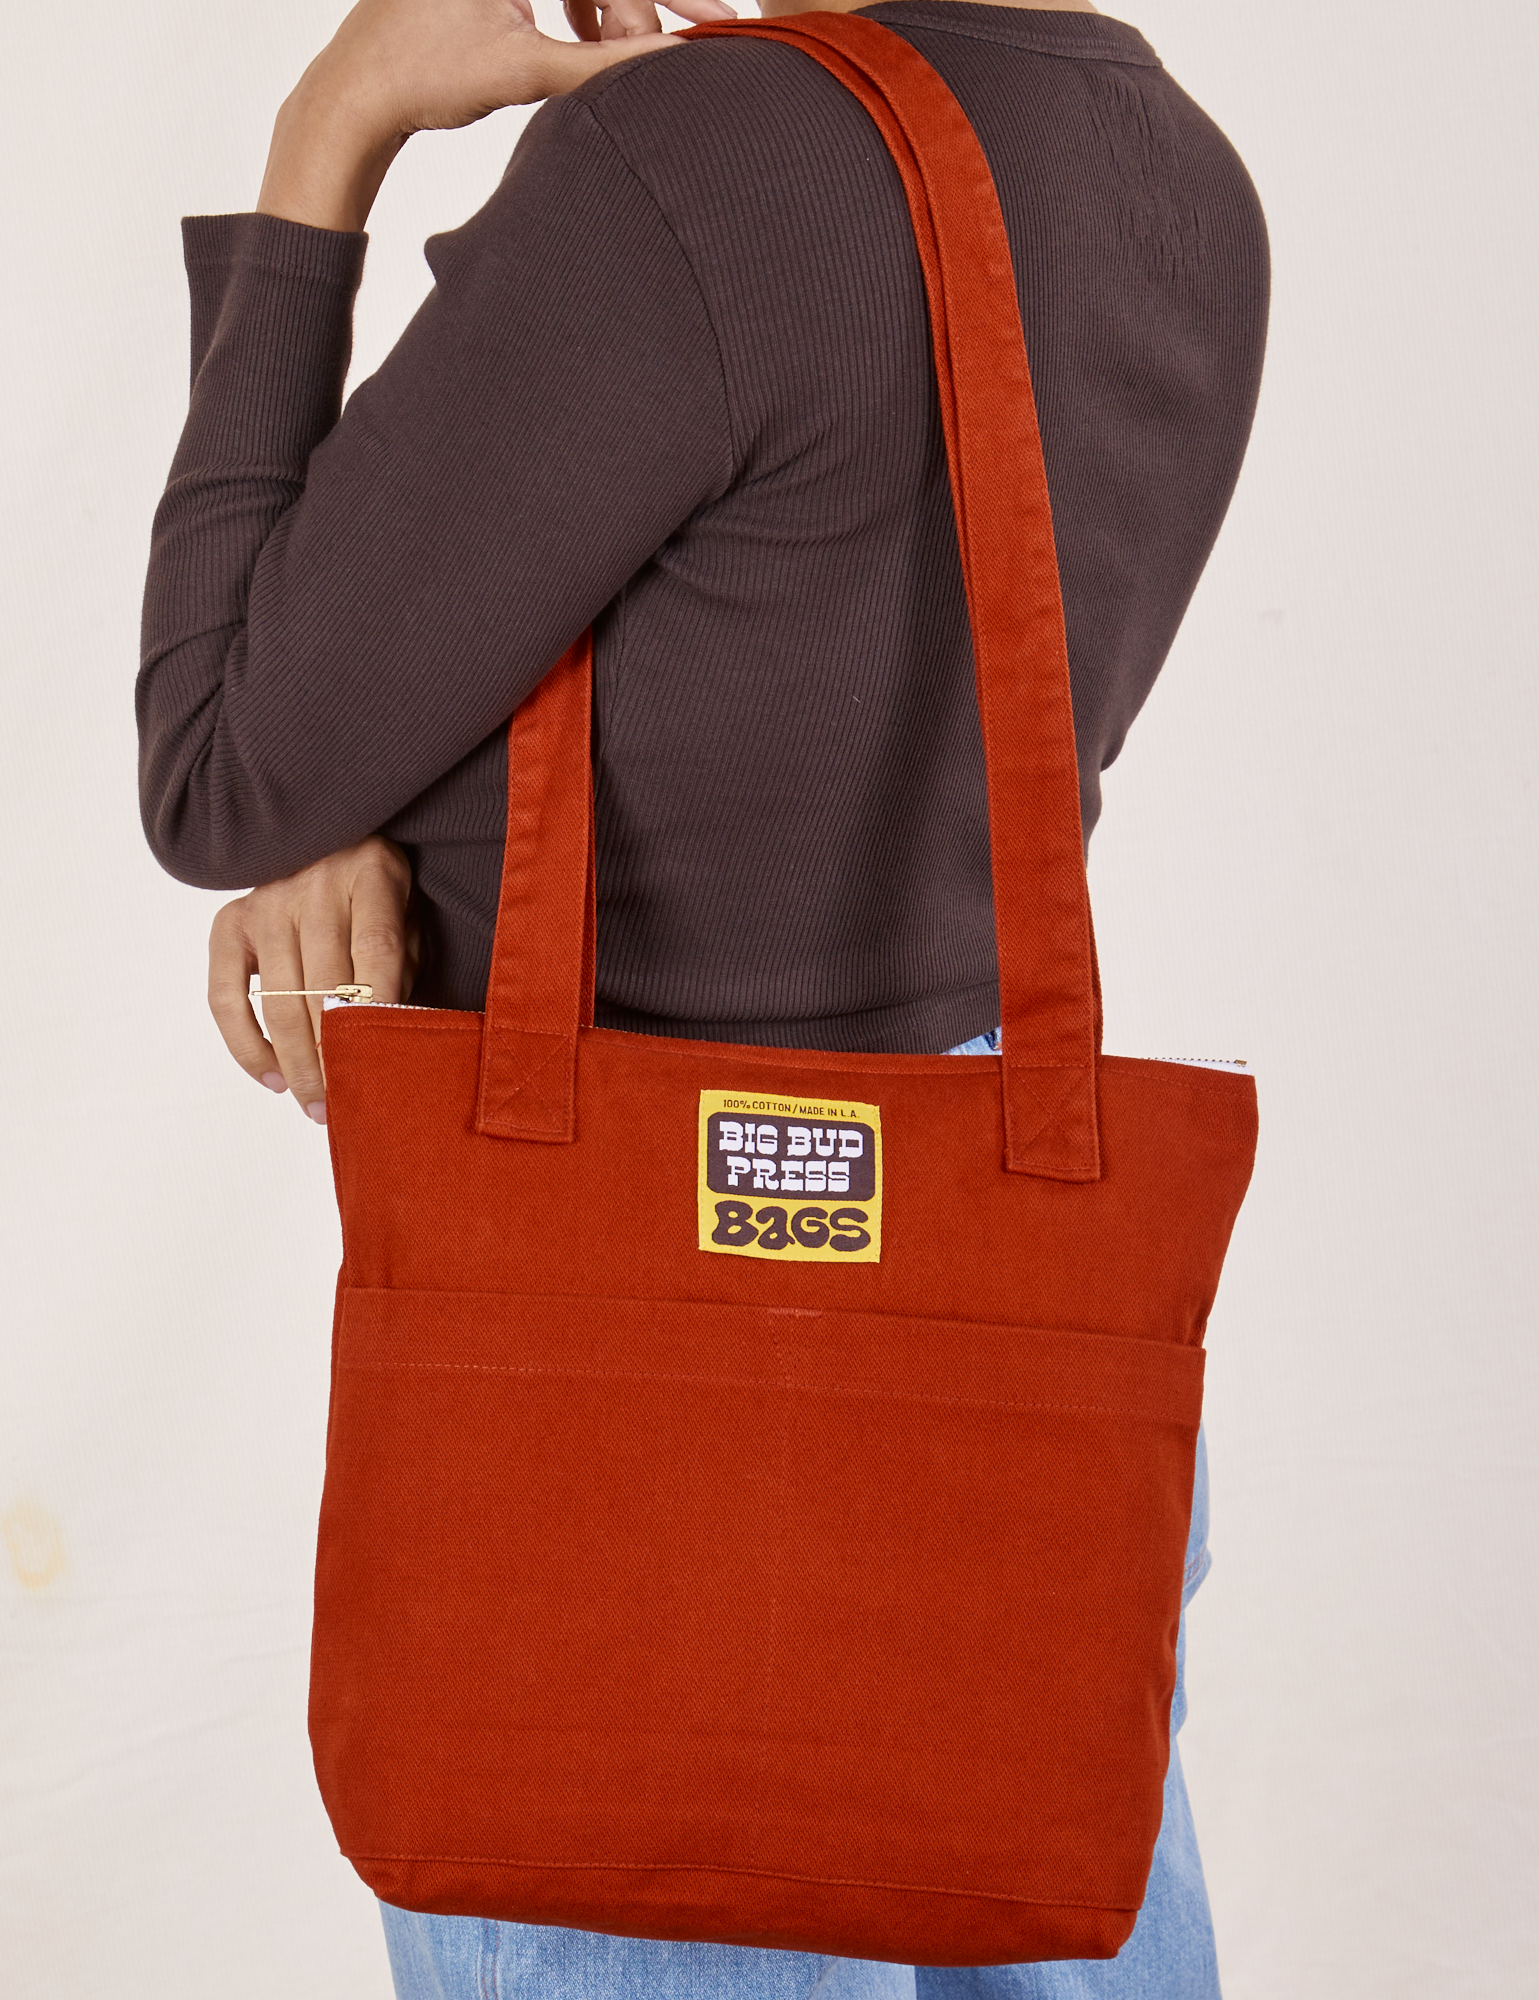 Denim Everyday Tote Bag – BIG BUD PRESS